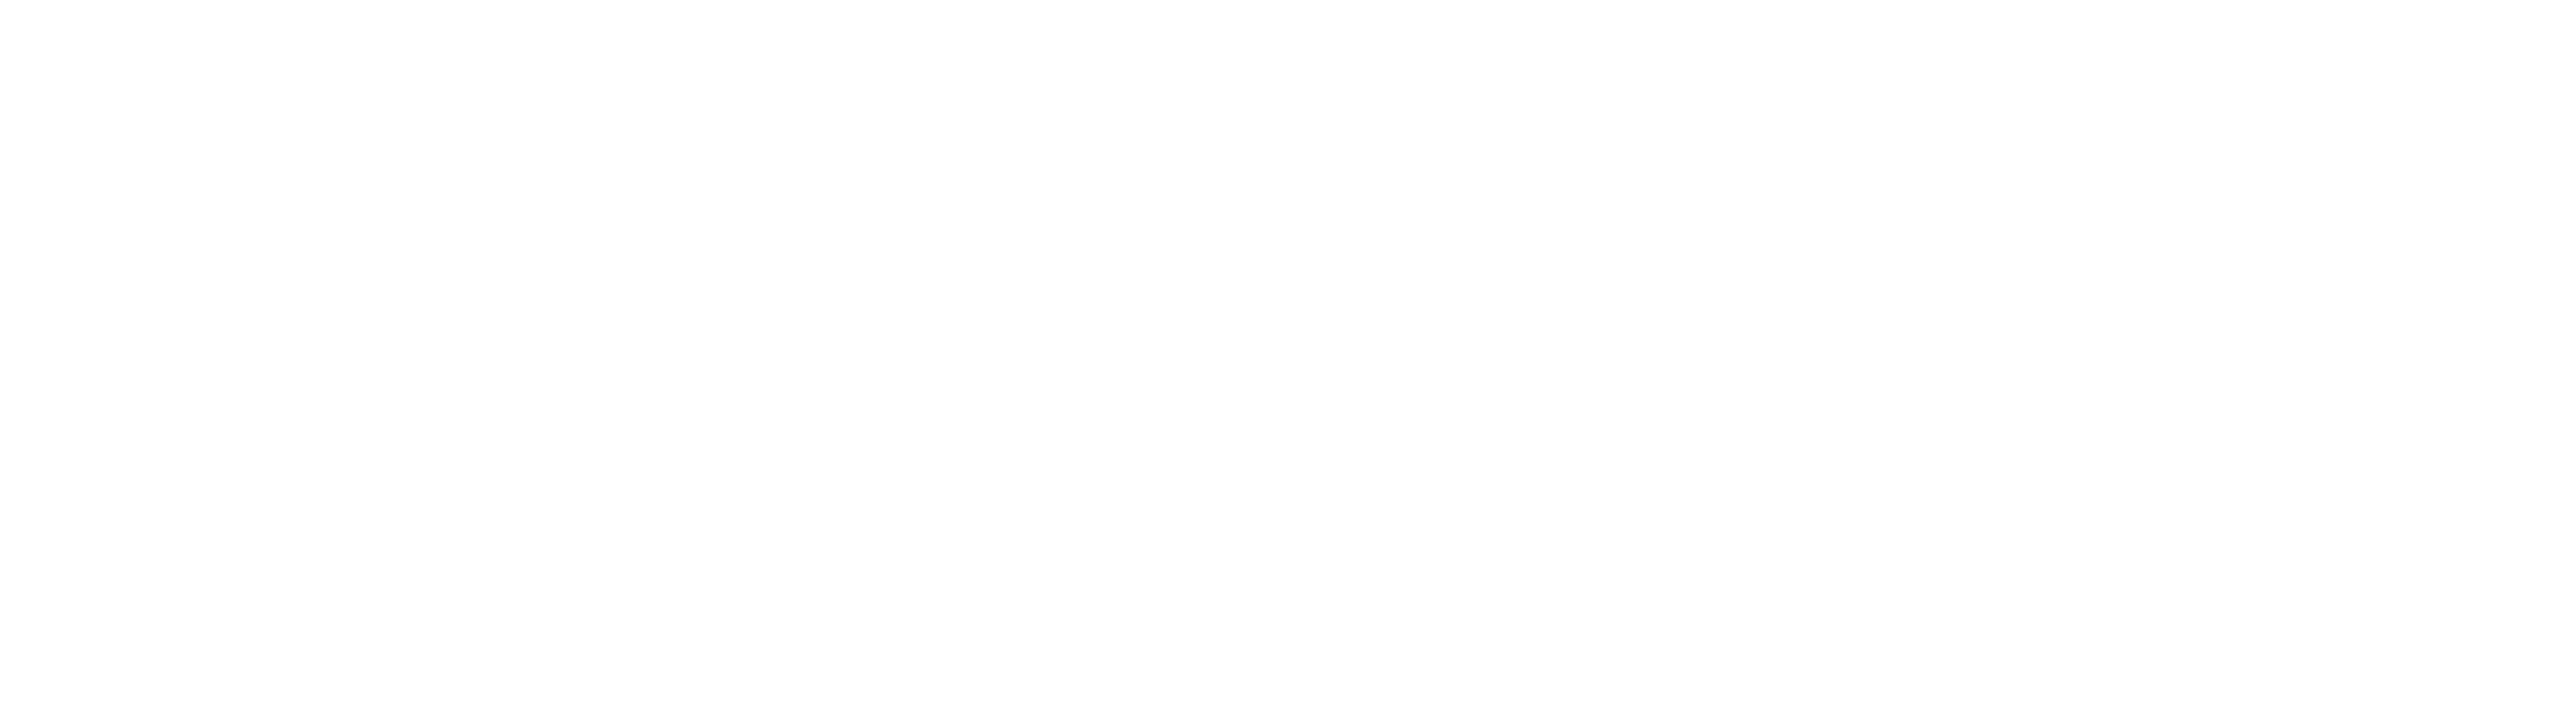 Legal Speak Logo